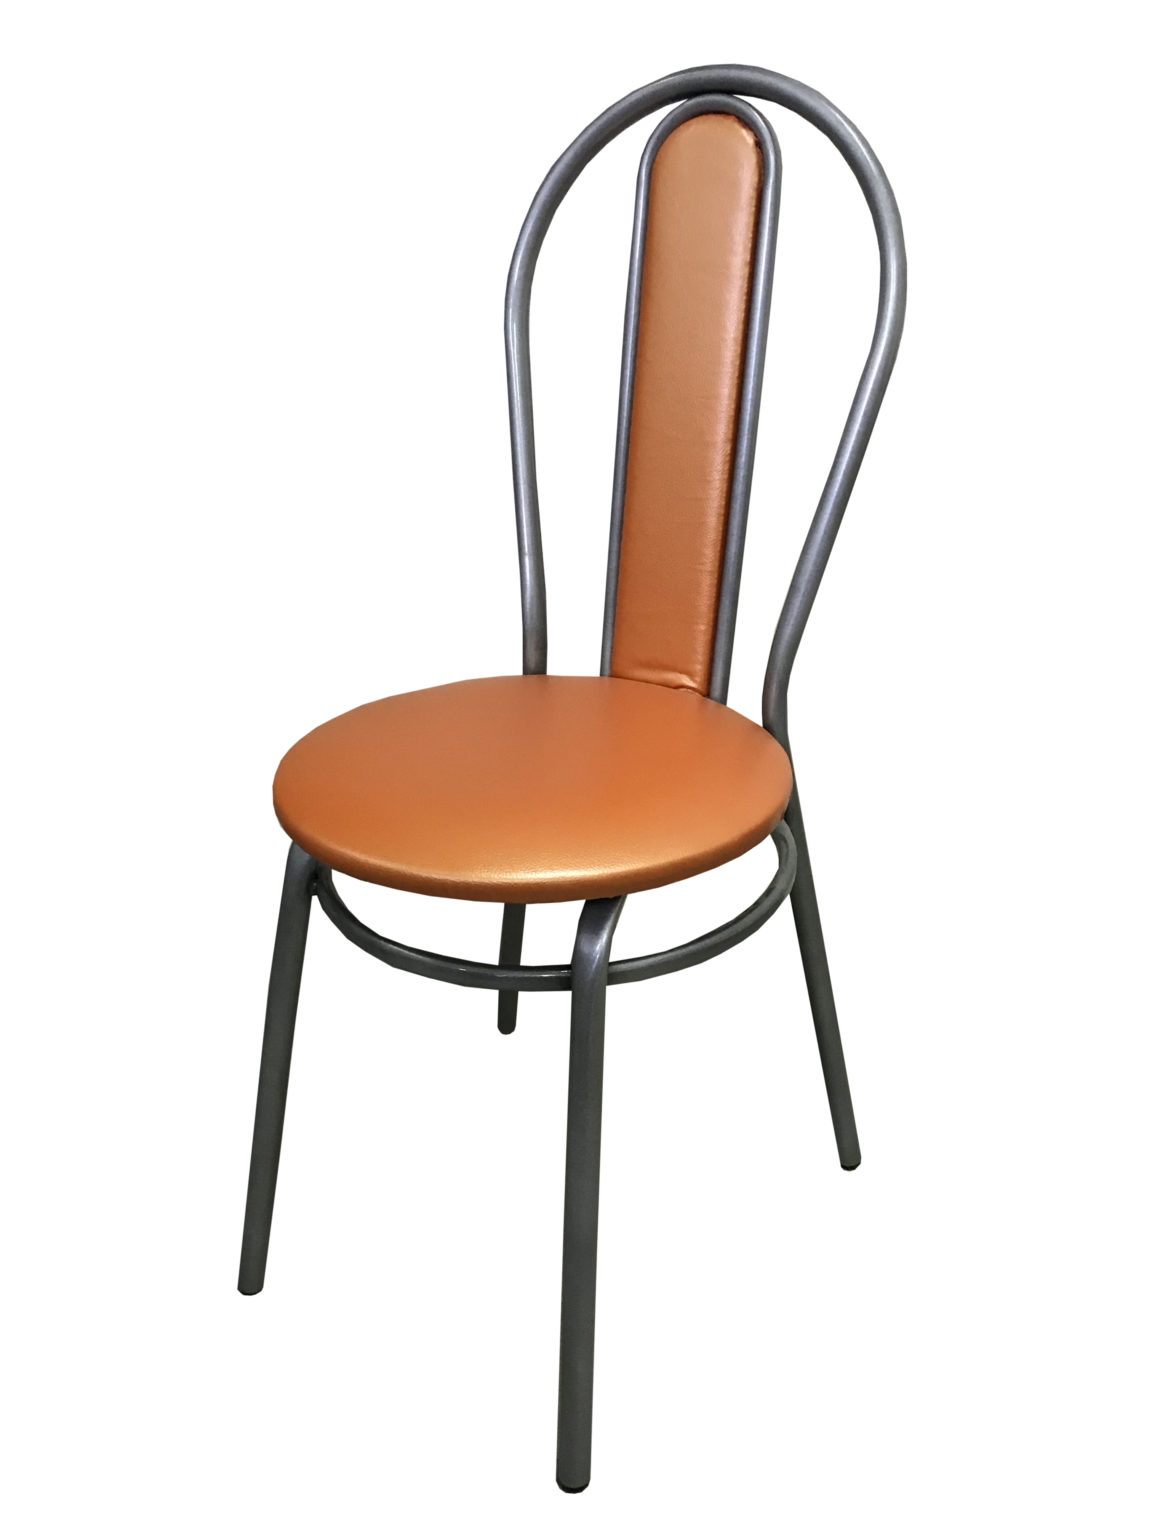 effezeta стулья на металлокаркасе